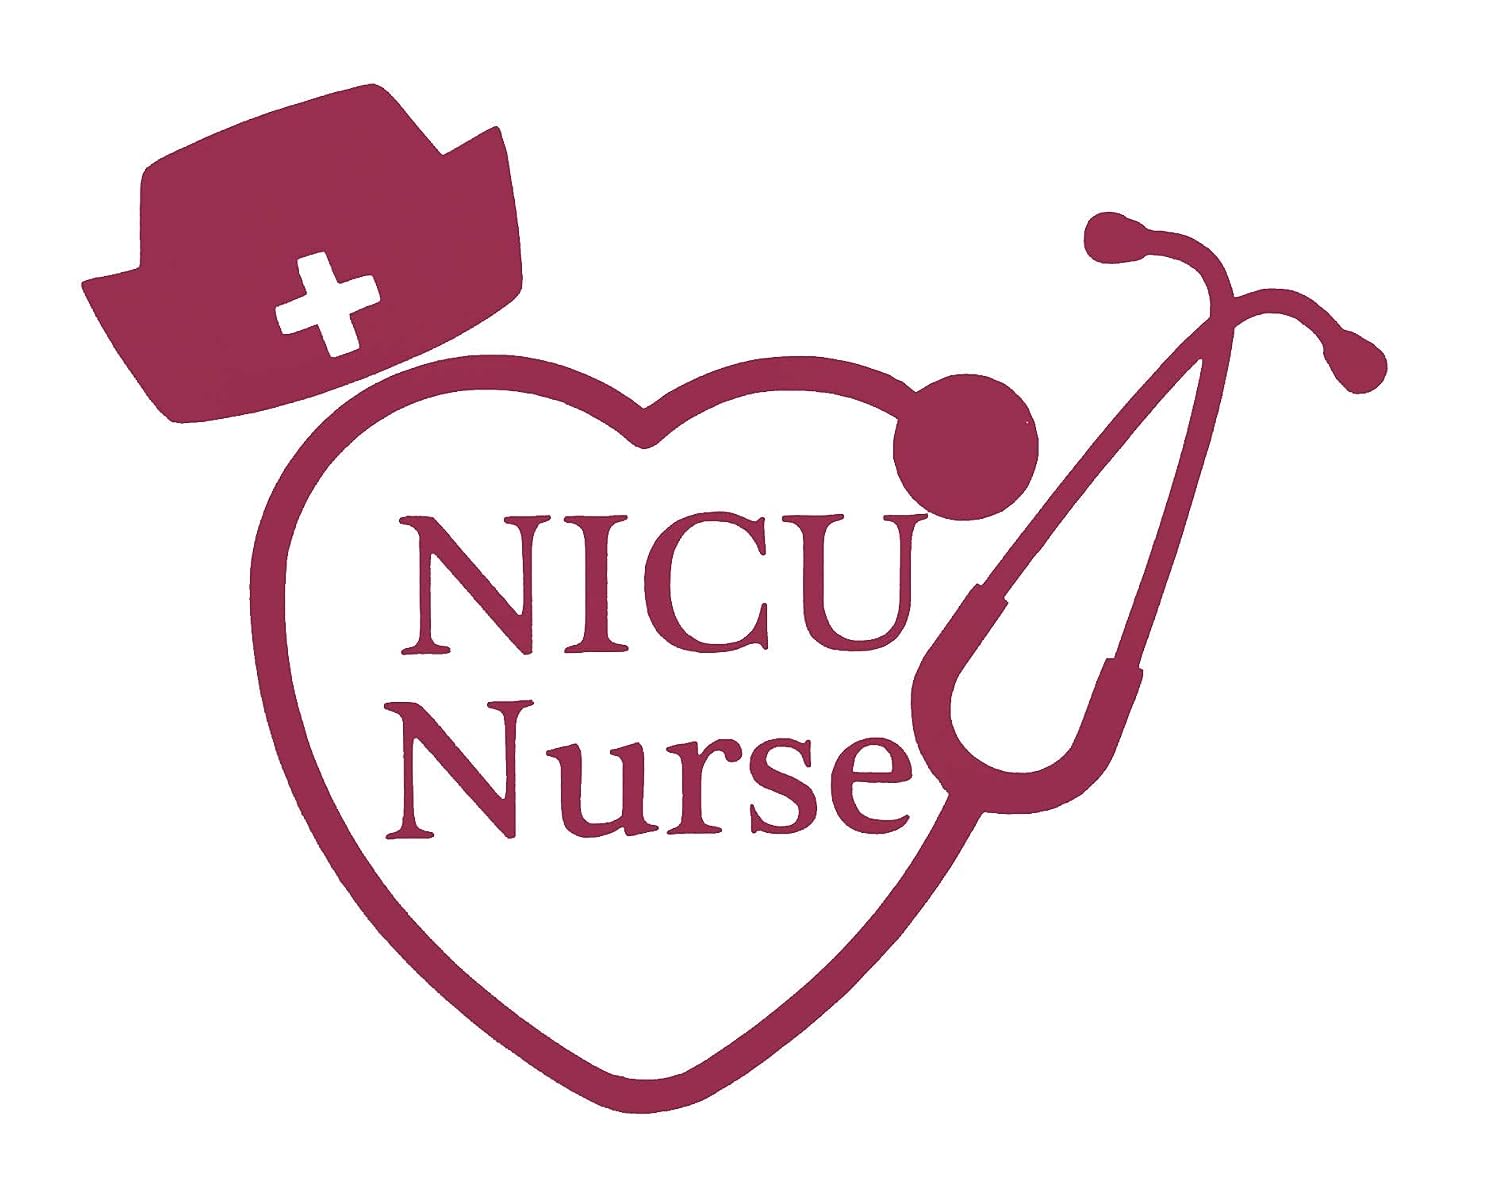 Custom NICU Nurse Stethoscope Vinyl Decal - Nursing [...]